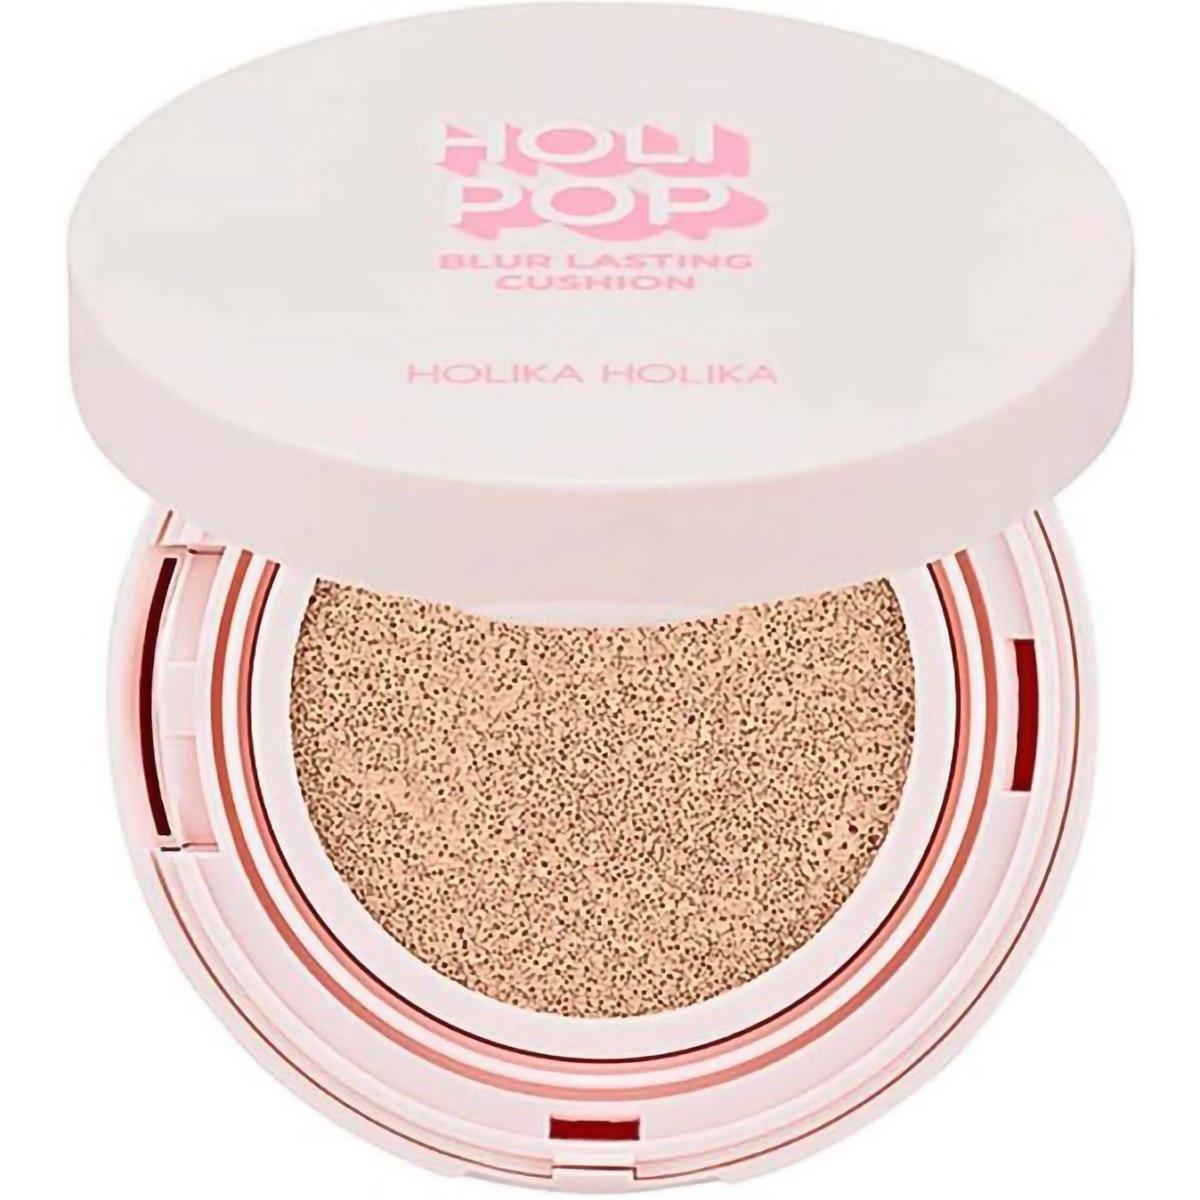 Кушон для лица Holika Holika Holi Pop Blur Lasting SPF 50+ PA+++, тон 03 (Sand Blur), 13 г - фото 1